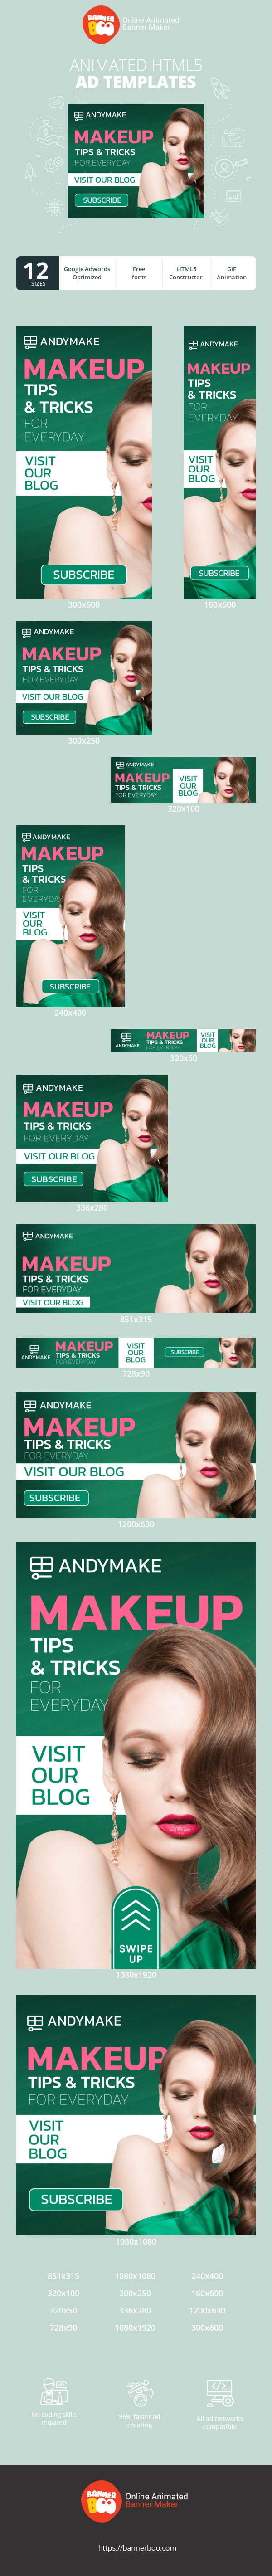 Шаблон рекламного банера — Makeup Tips & Tricks For Everyday — Visit Our Blog